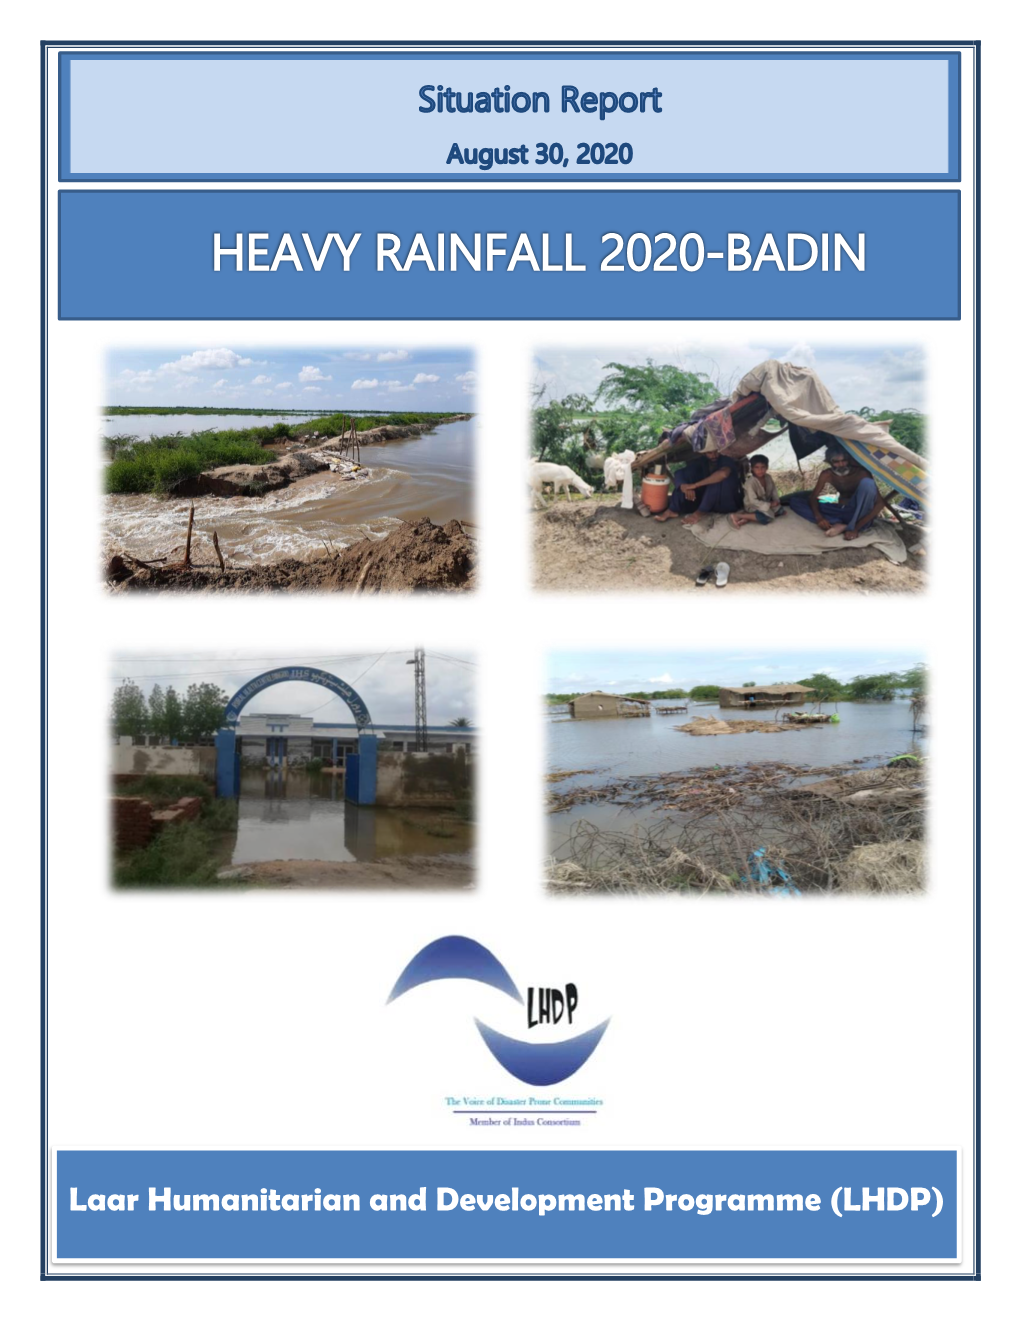 Badin Rainfall SITREP 30 August 2020 by LDHP